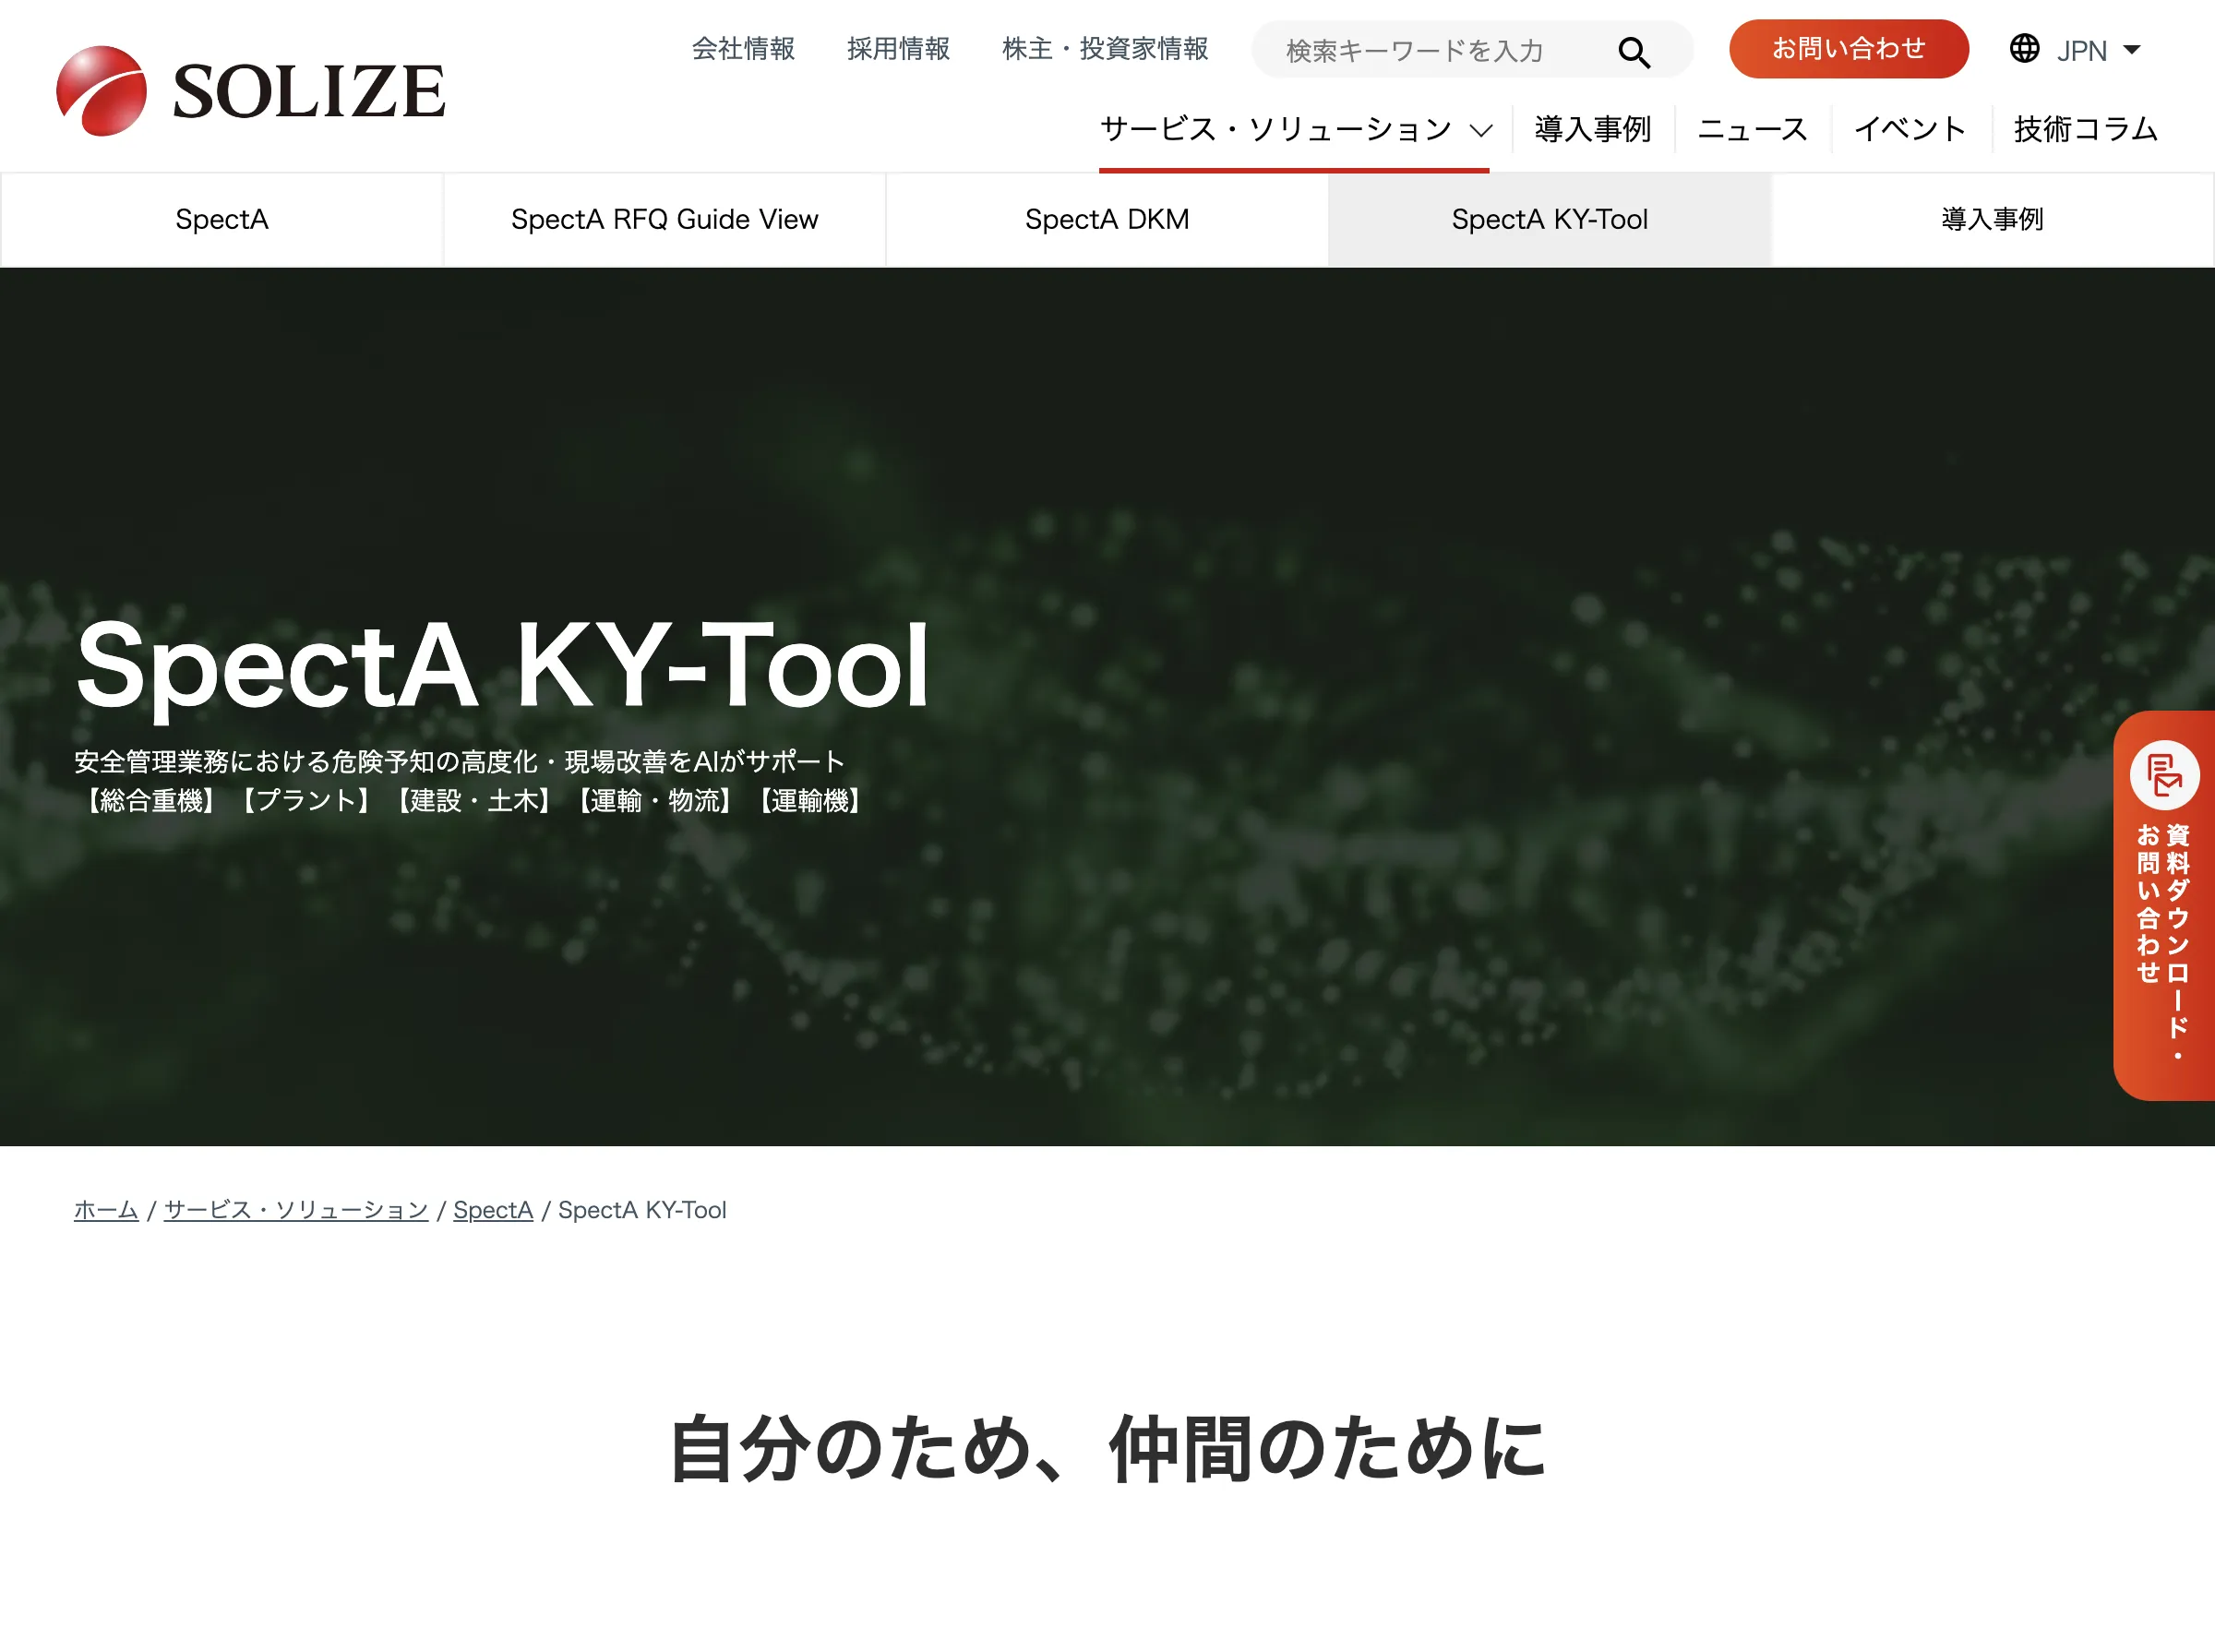 SpectA KY-Tool(SOLIZE株式会社)